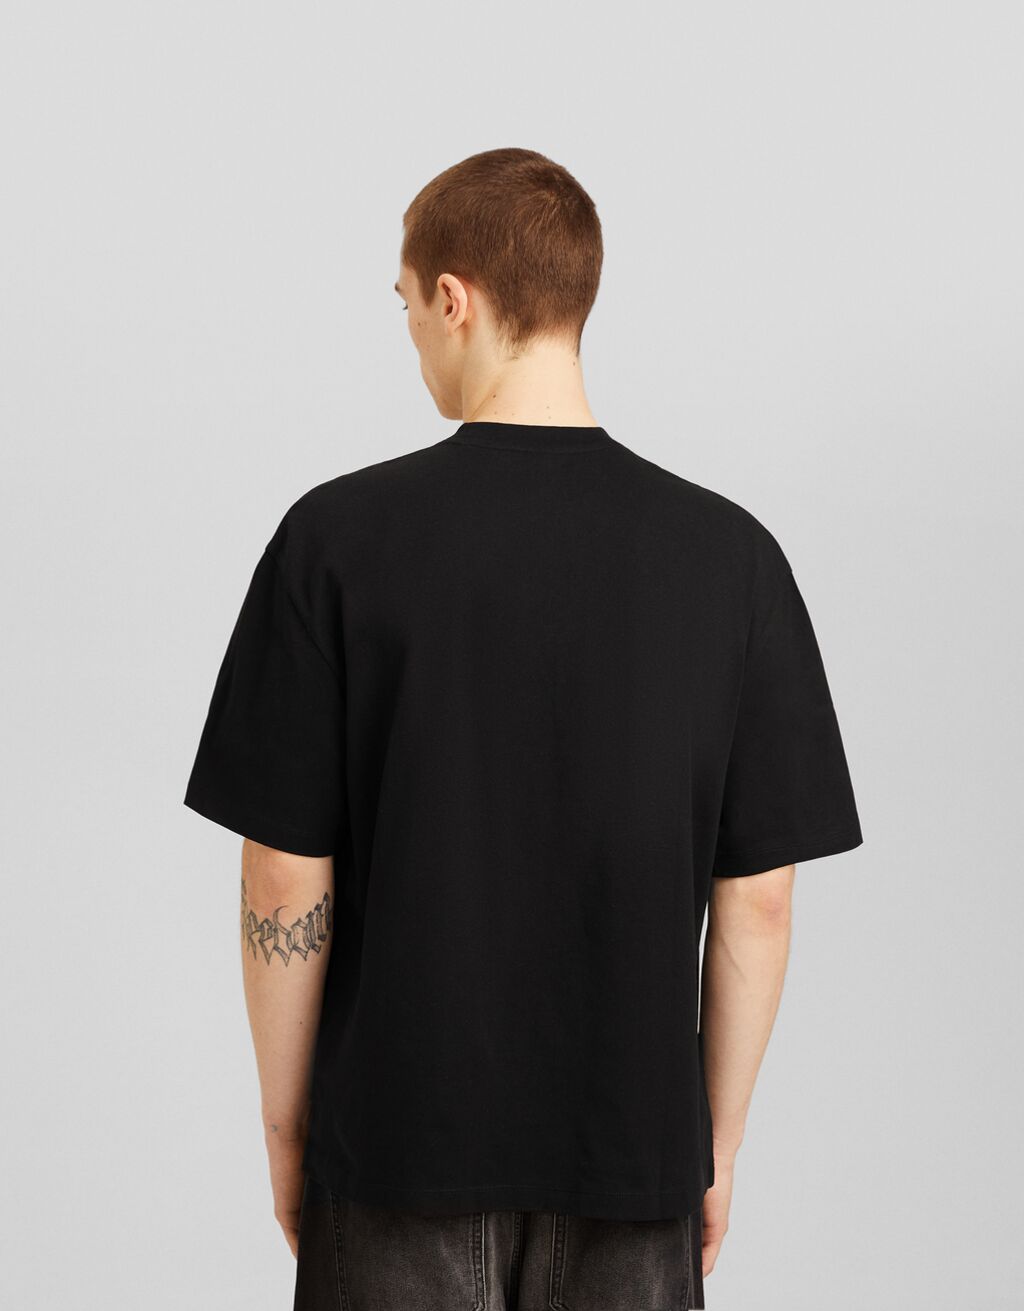 VSSSJ Fashion Shirt for Men Oversized Fit 3D World Map Print Short Sleeve  Crewneck T-Shirt Comfortable Summer Stylish Lounging Blouse Top Black XXL